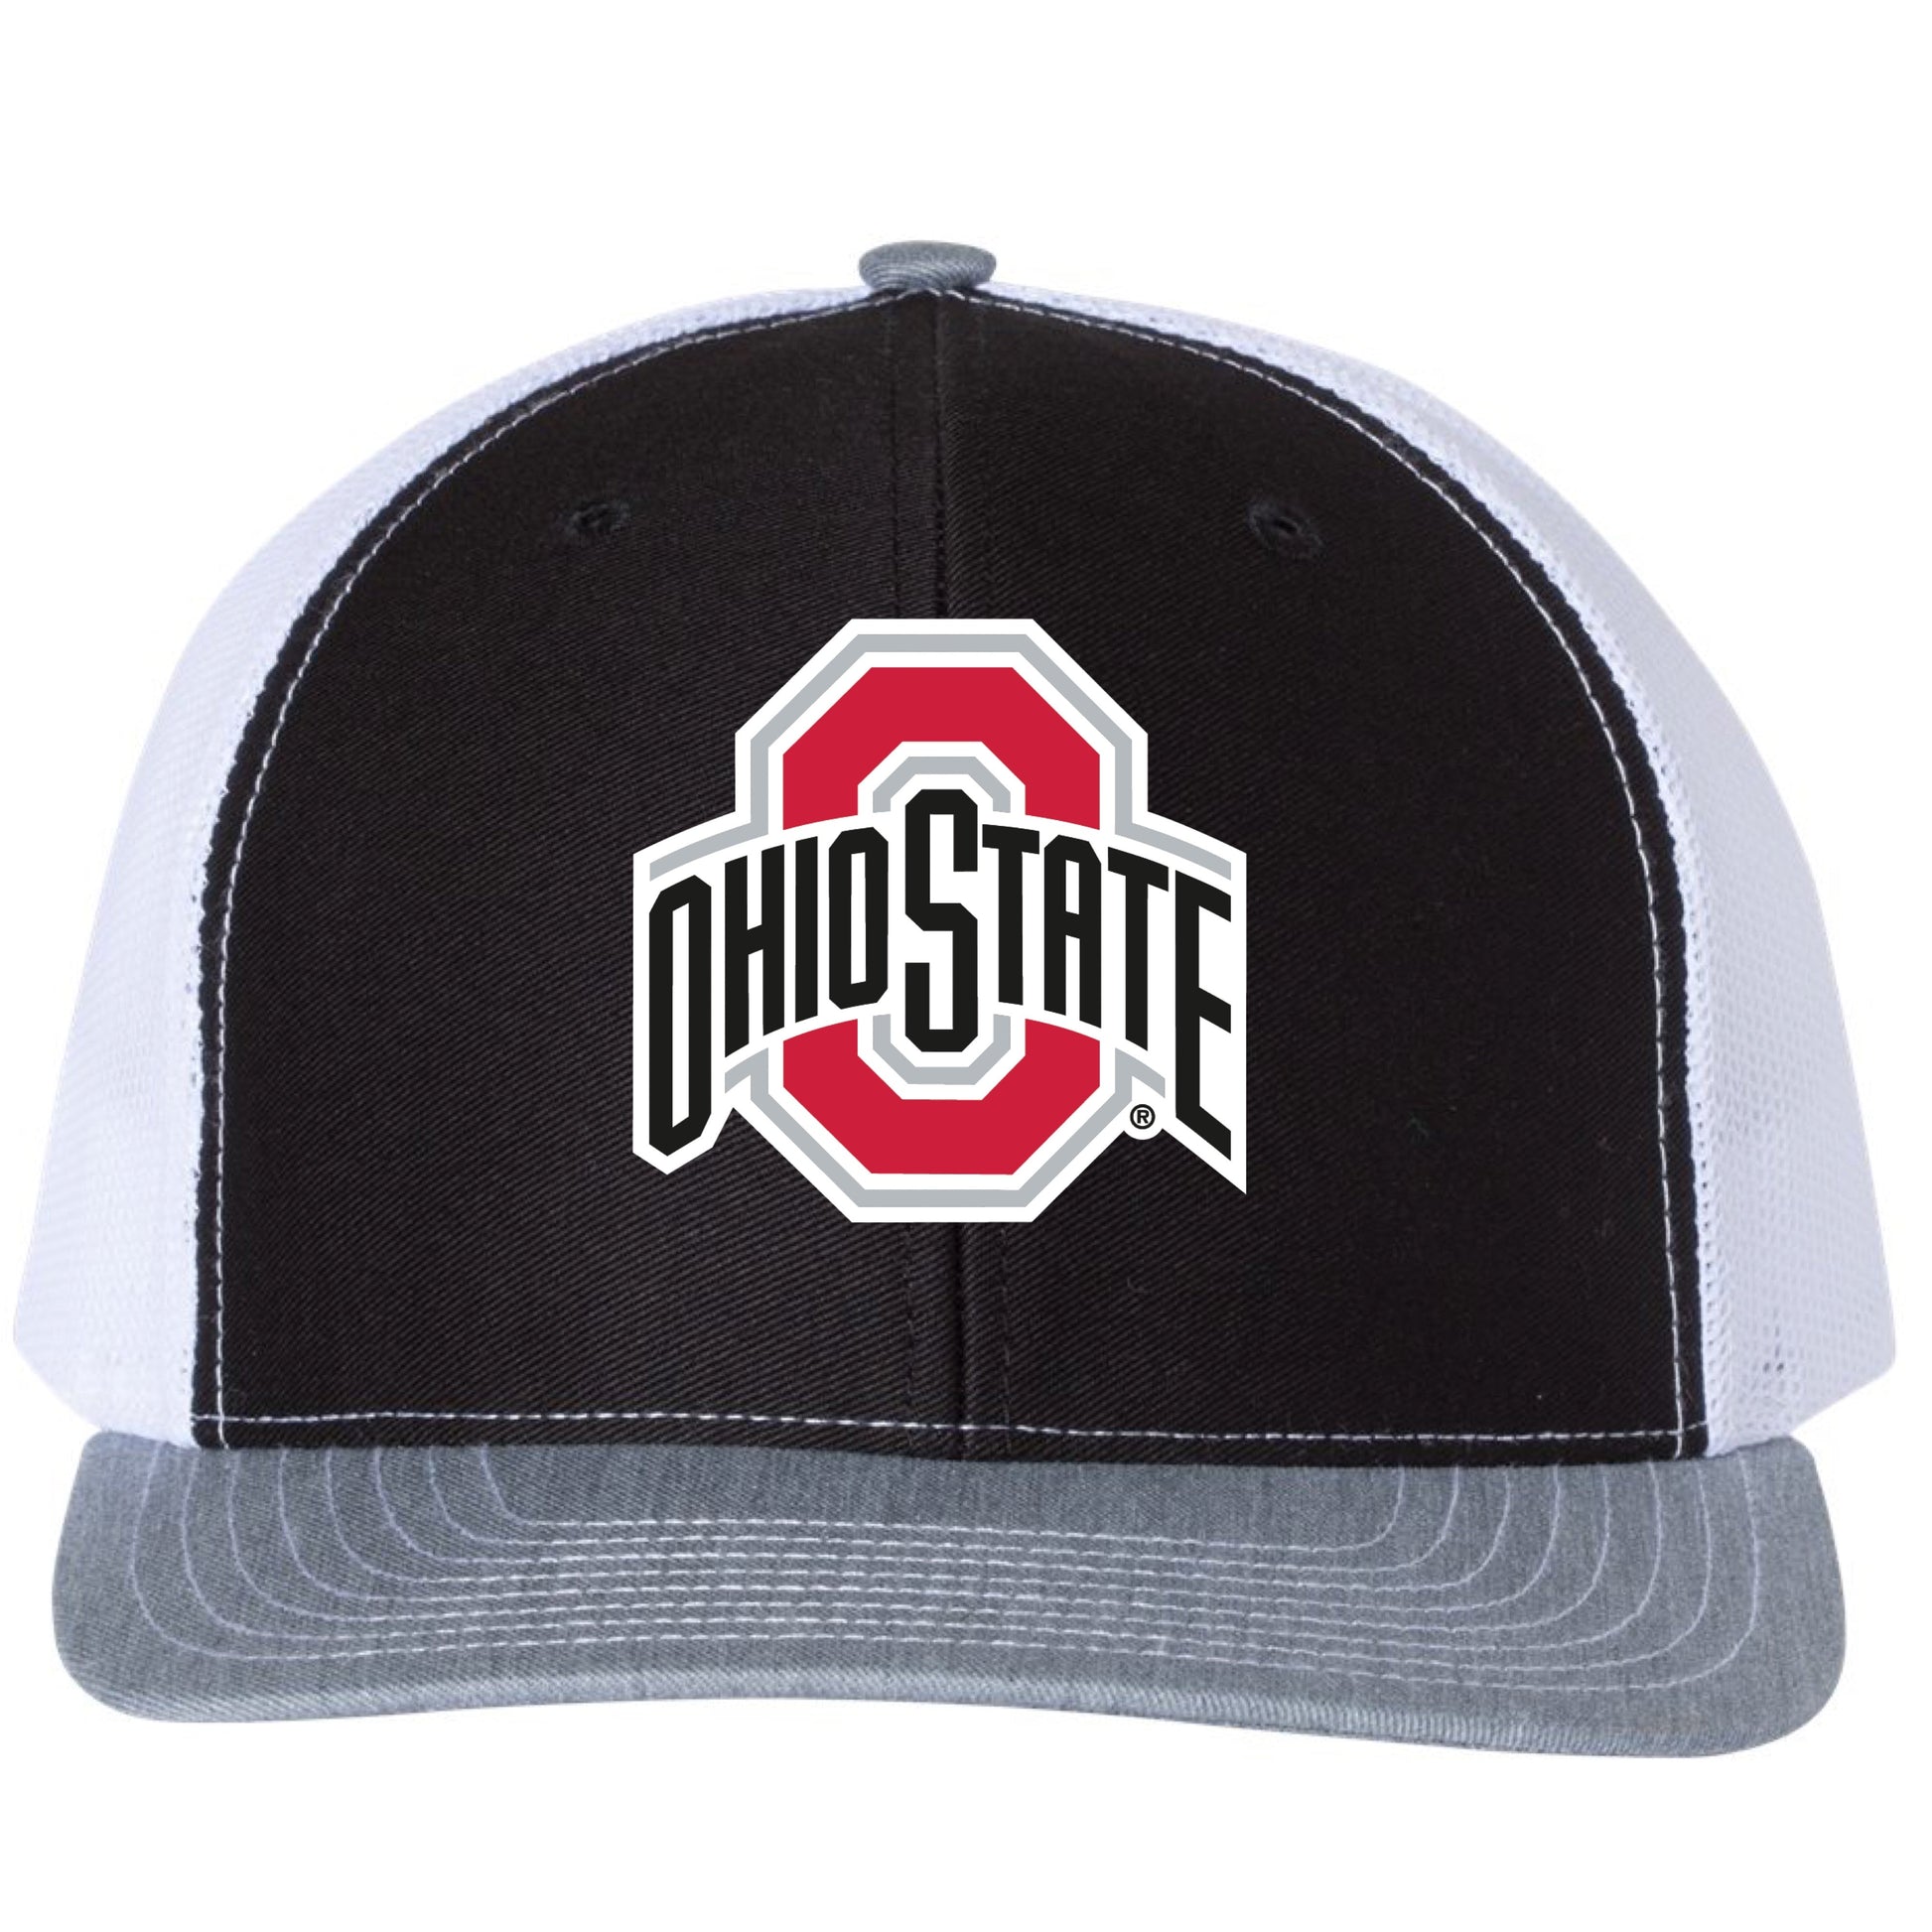 Ohio State Buckeyes 3D PVC Patch Hat- Black/ White/ Heather Grey - Ten Gallon Hat Co.